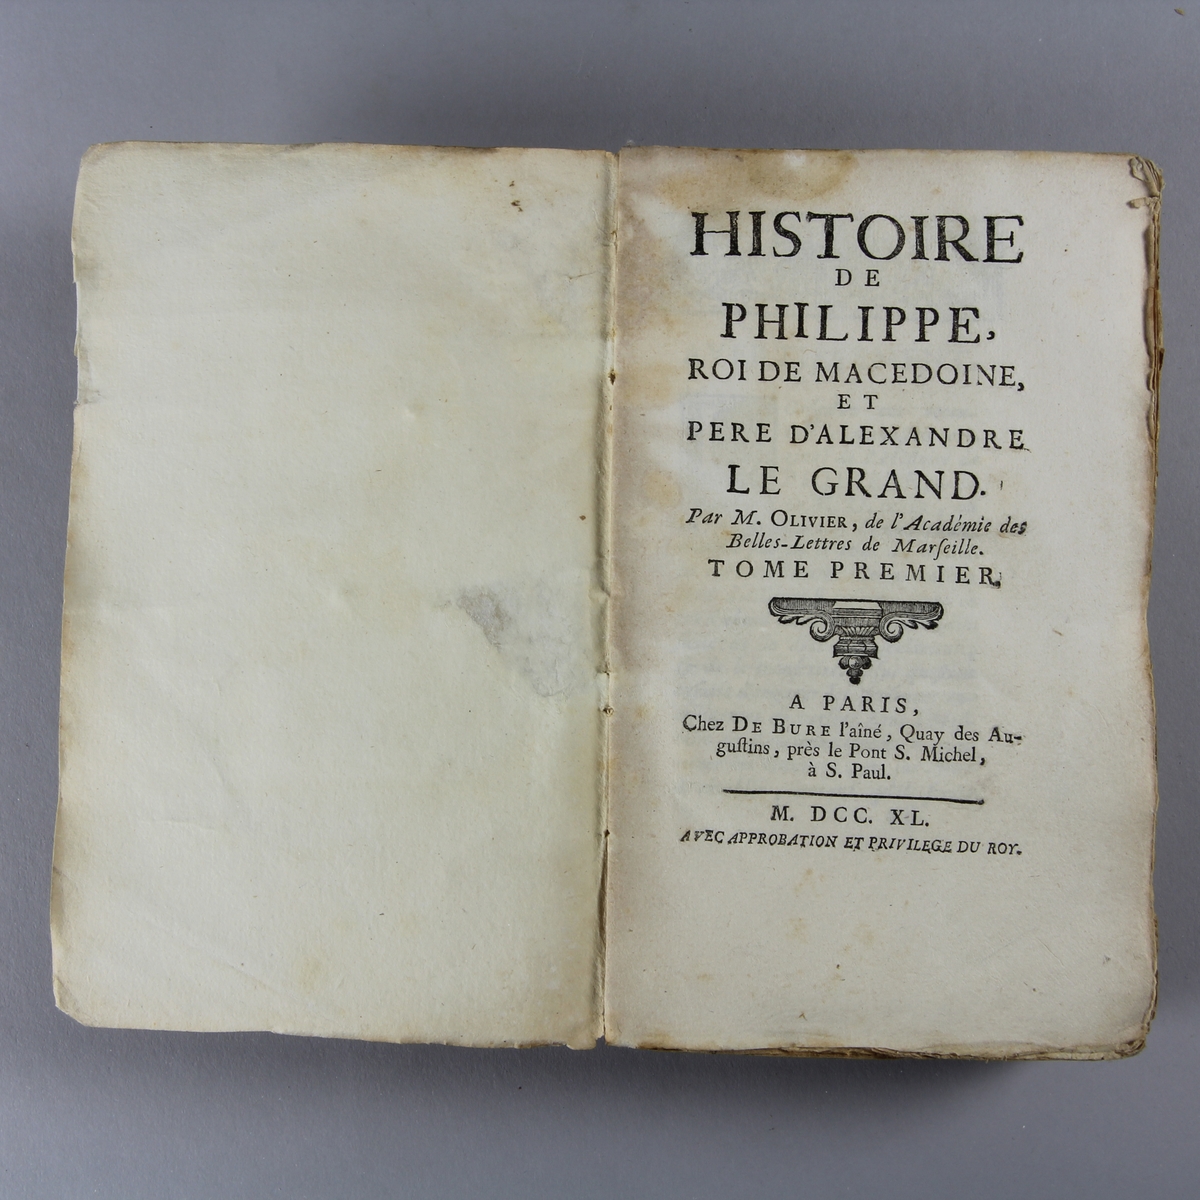 Bok, häftad, "Histoire de Philippe, roi de Macedoine et père d'Alexandre le grand." del 1, tryckt i Paris 1740. Pärmar av marmorerat papper, oskuret snitt.